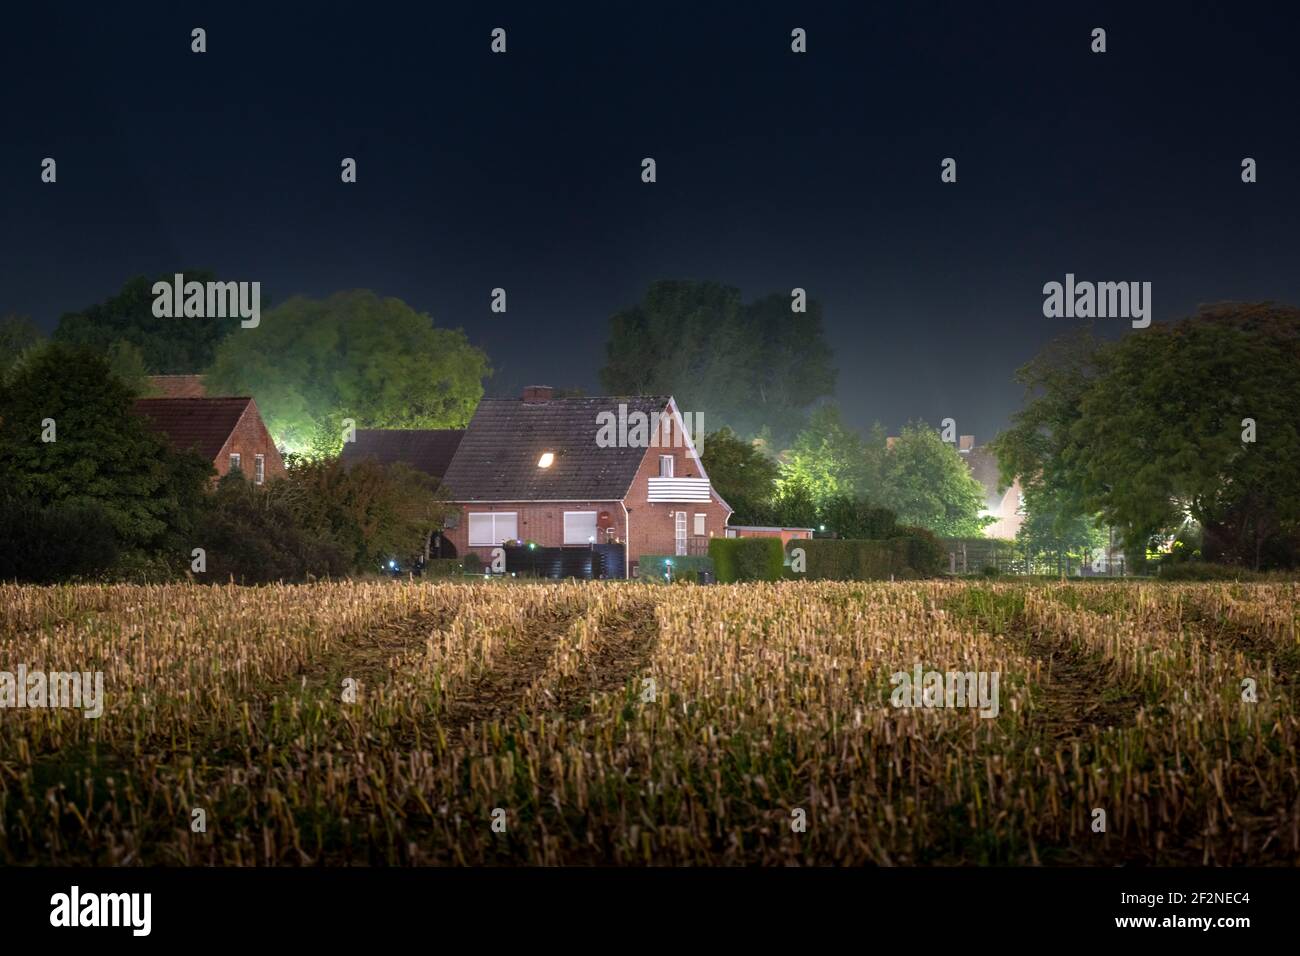 Germany, Lower Saxony, East Frisia, Krummhörn, housing estate at night. Stock Photo